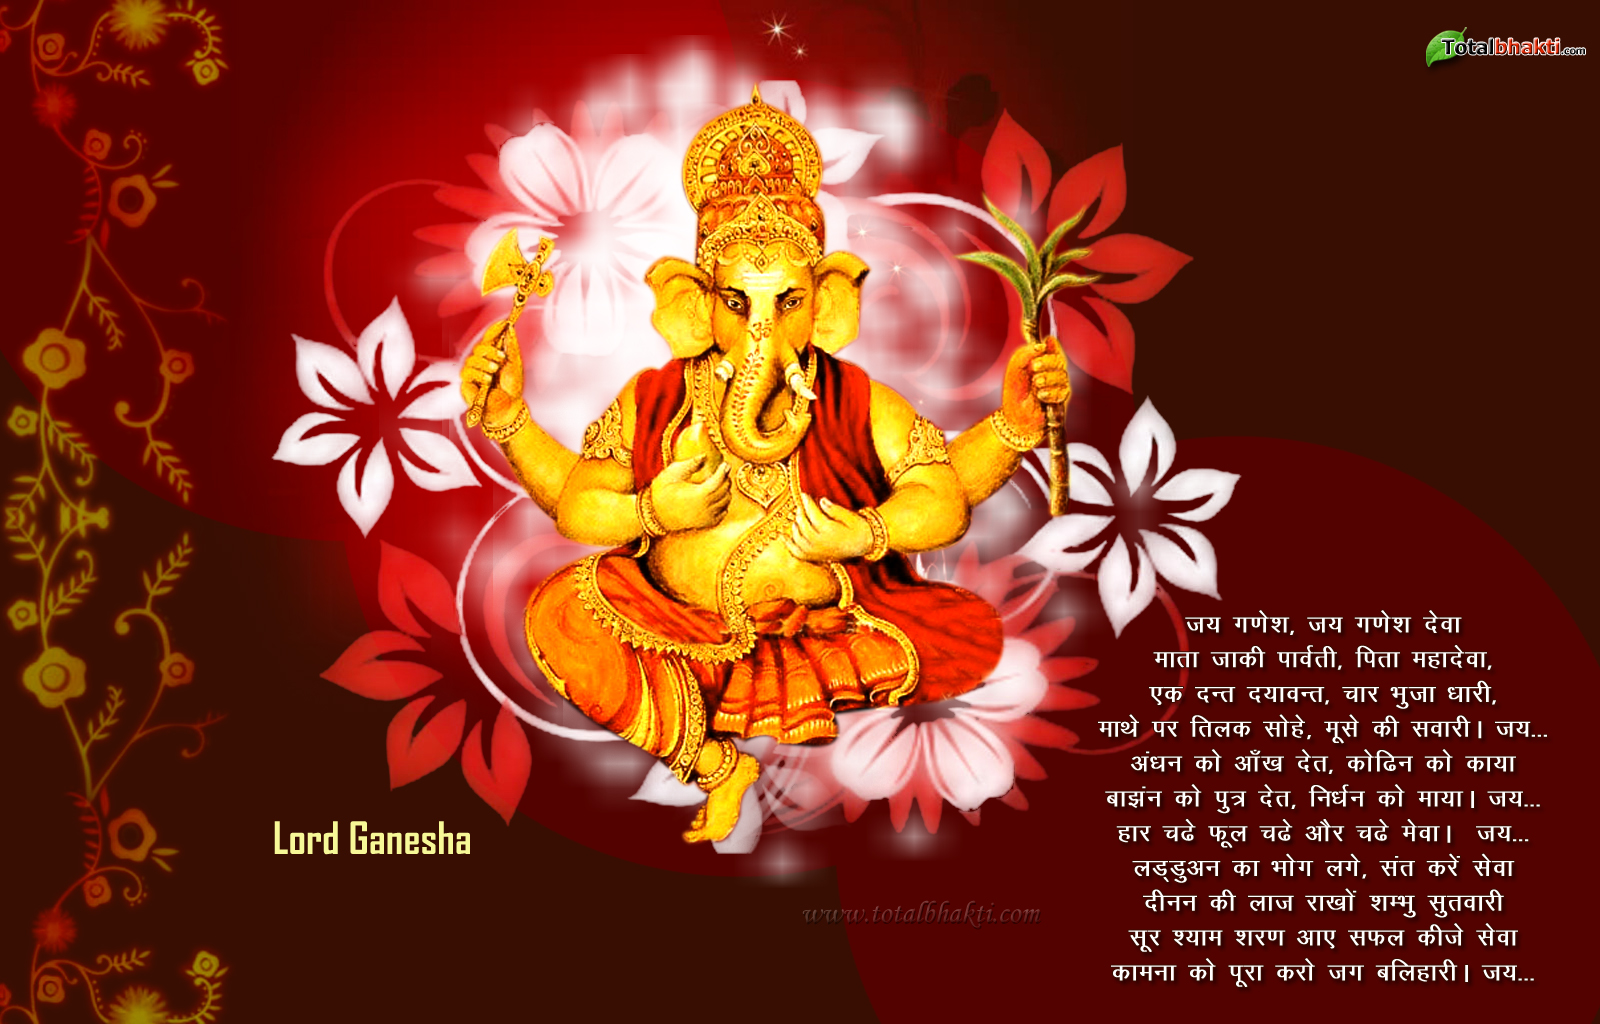 Wallpaper Gallery Lord Ganesha